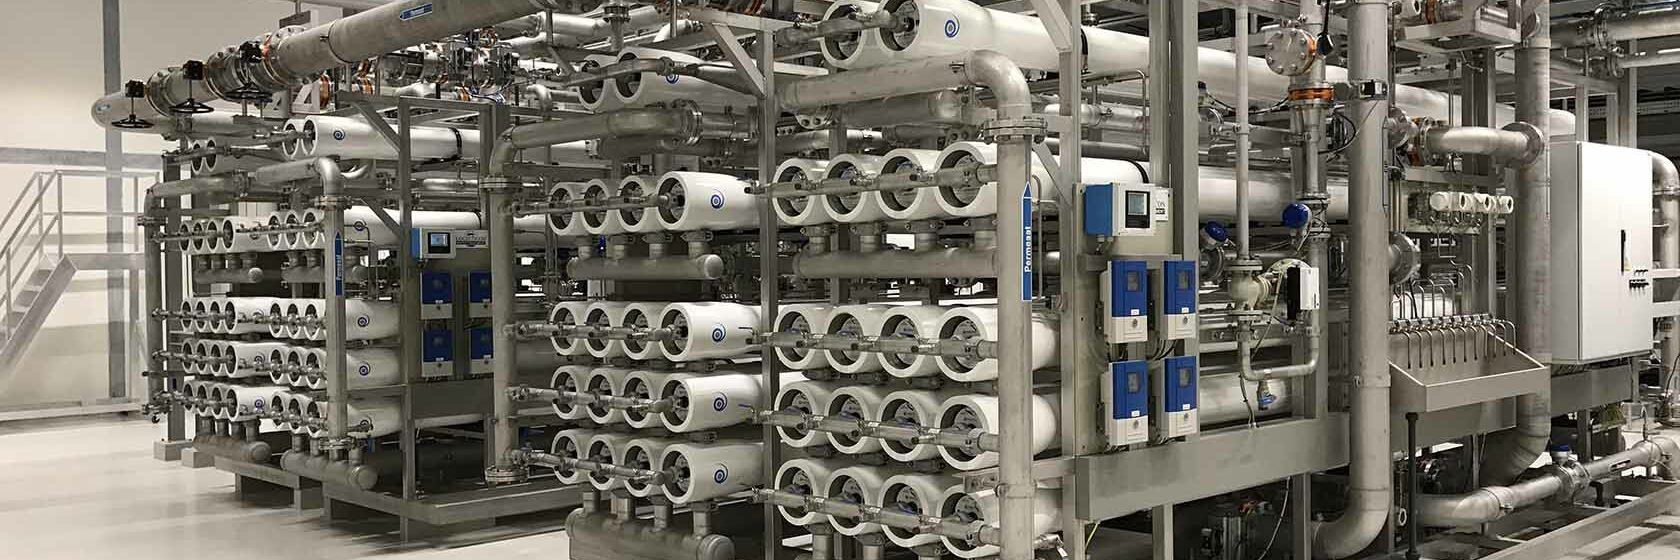 Machines in Drinkwaterbedrijf Oasen zuiveringssysteem